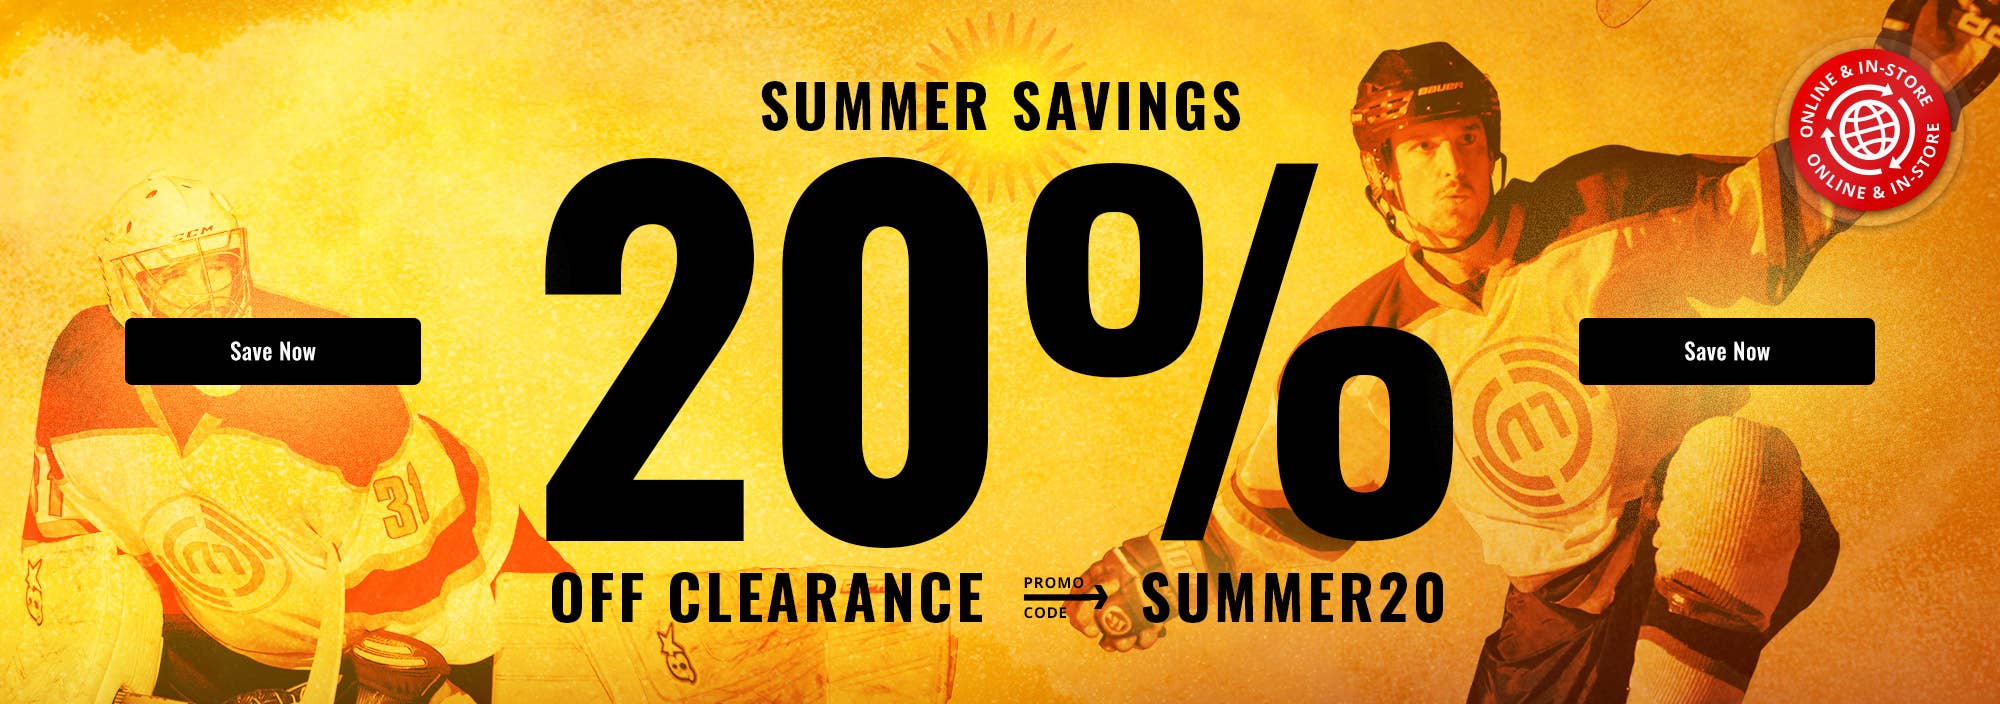 Summer Savings: 20% off clearance